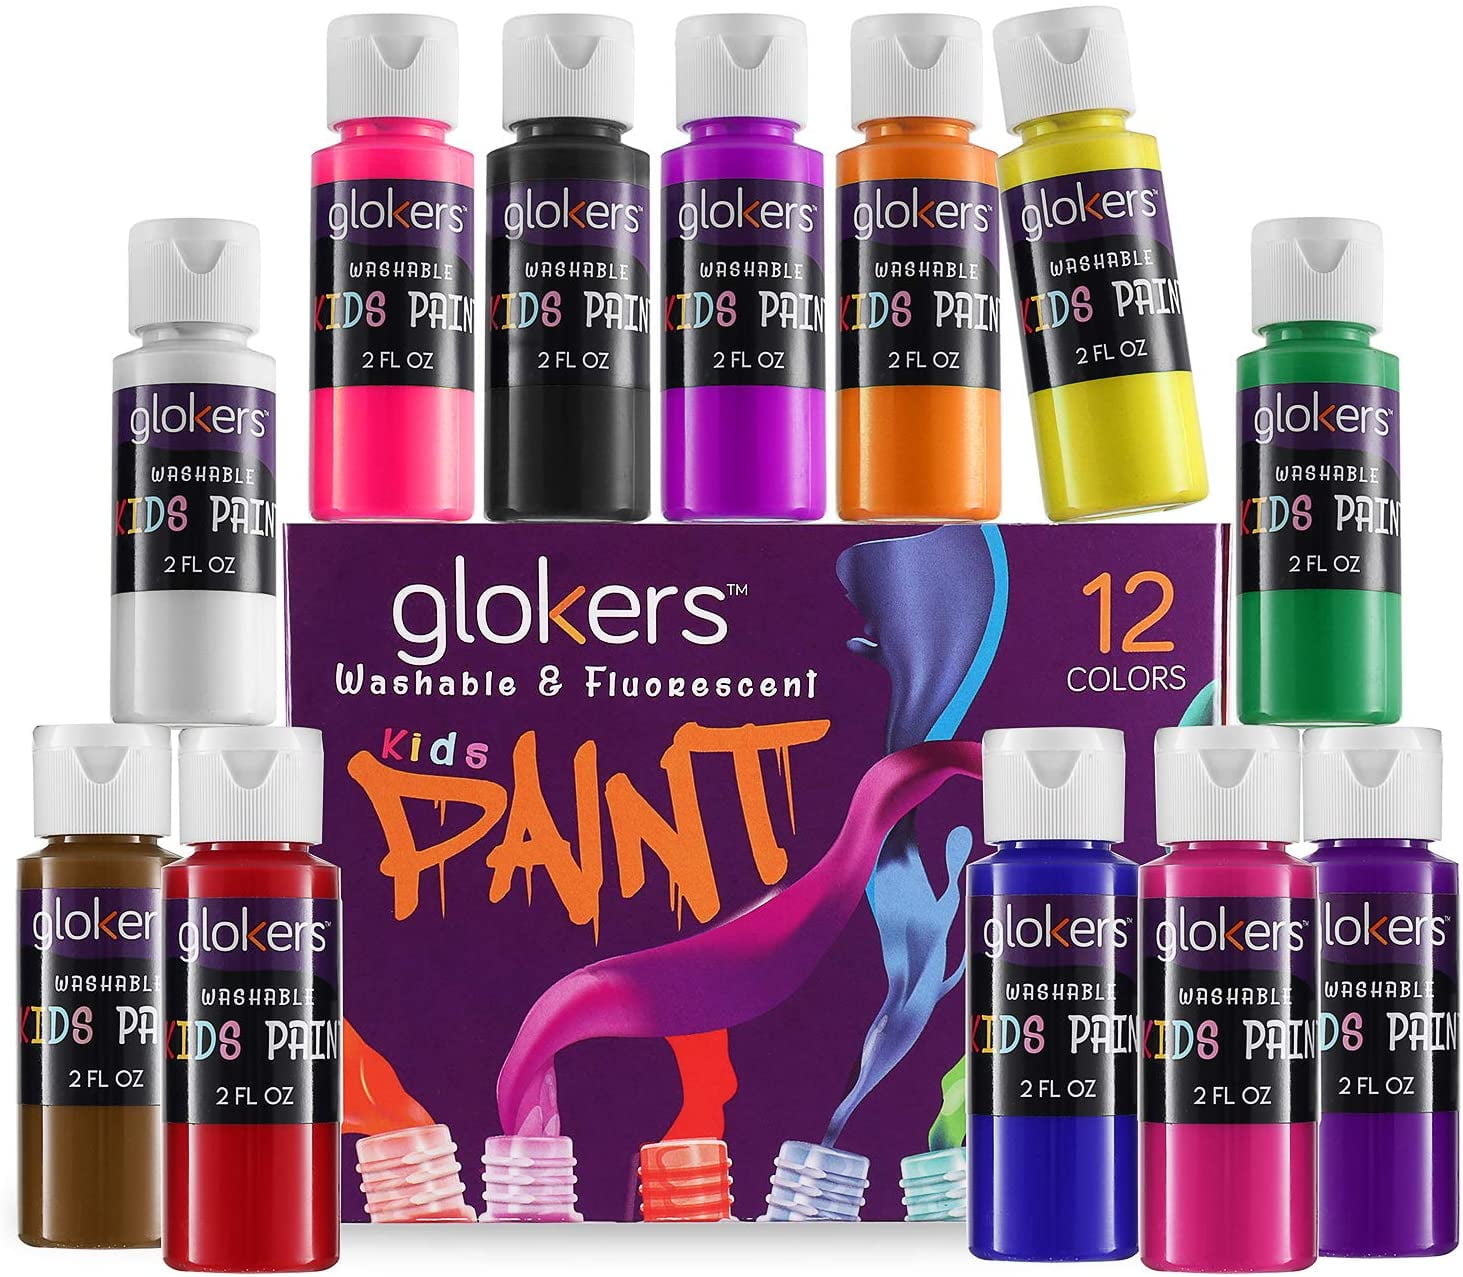 MOONKEE Washable Paint Kids Set - Non Toxic Full Kit of 8 Assorted